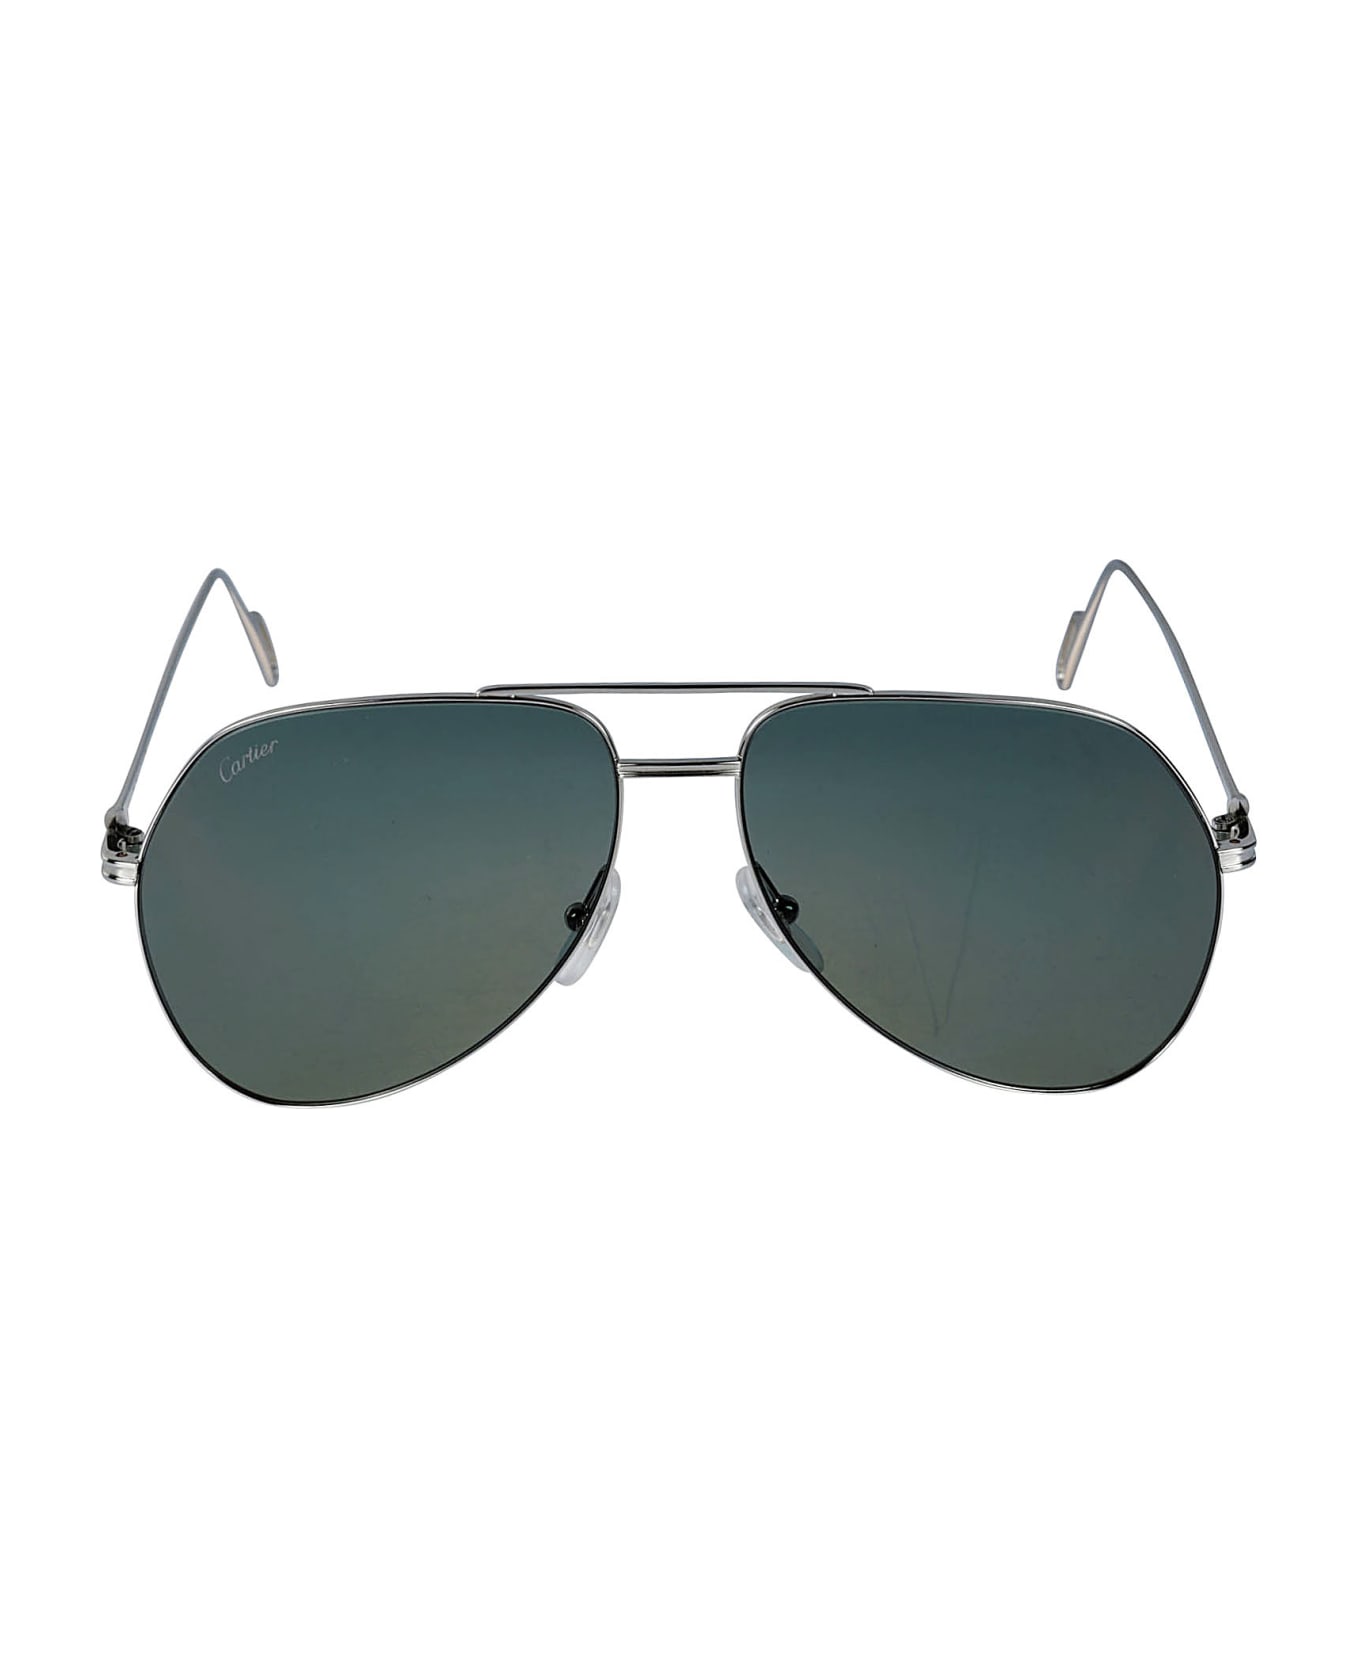 Cartier Eyewear Aviator Teardrop Sunglasses - Green/Grey サングラス